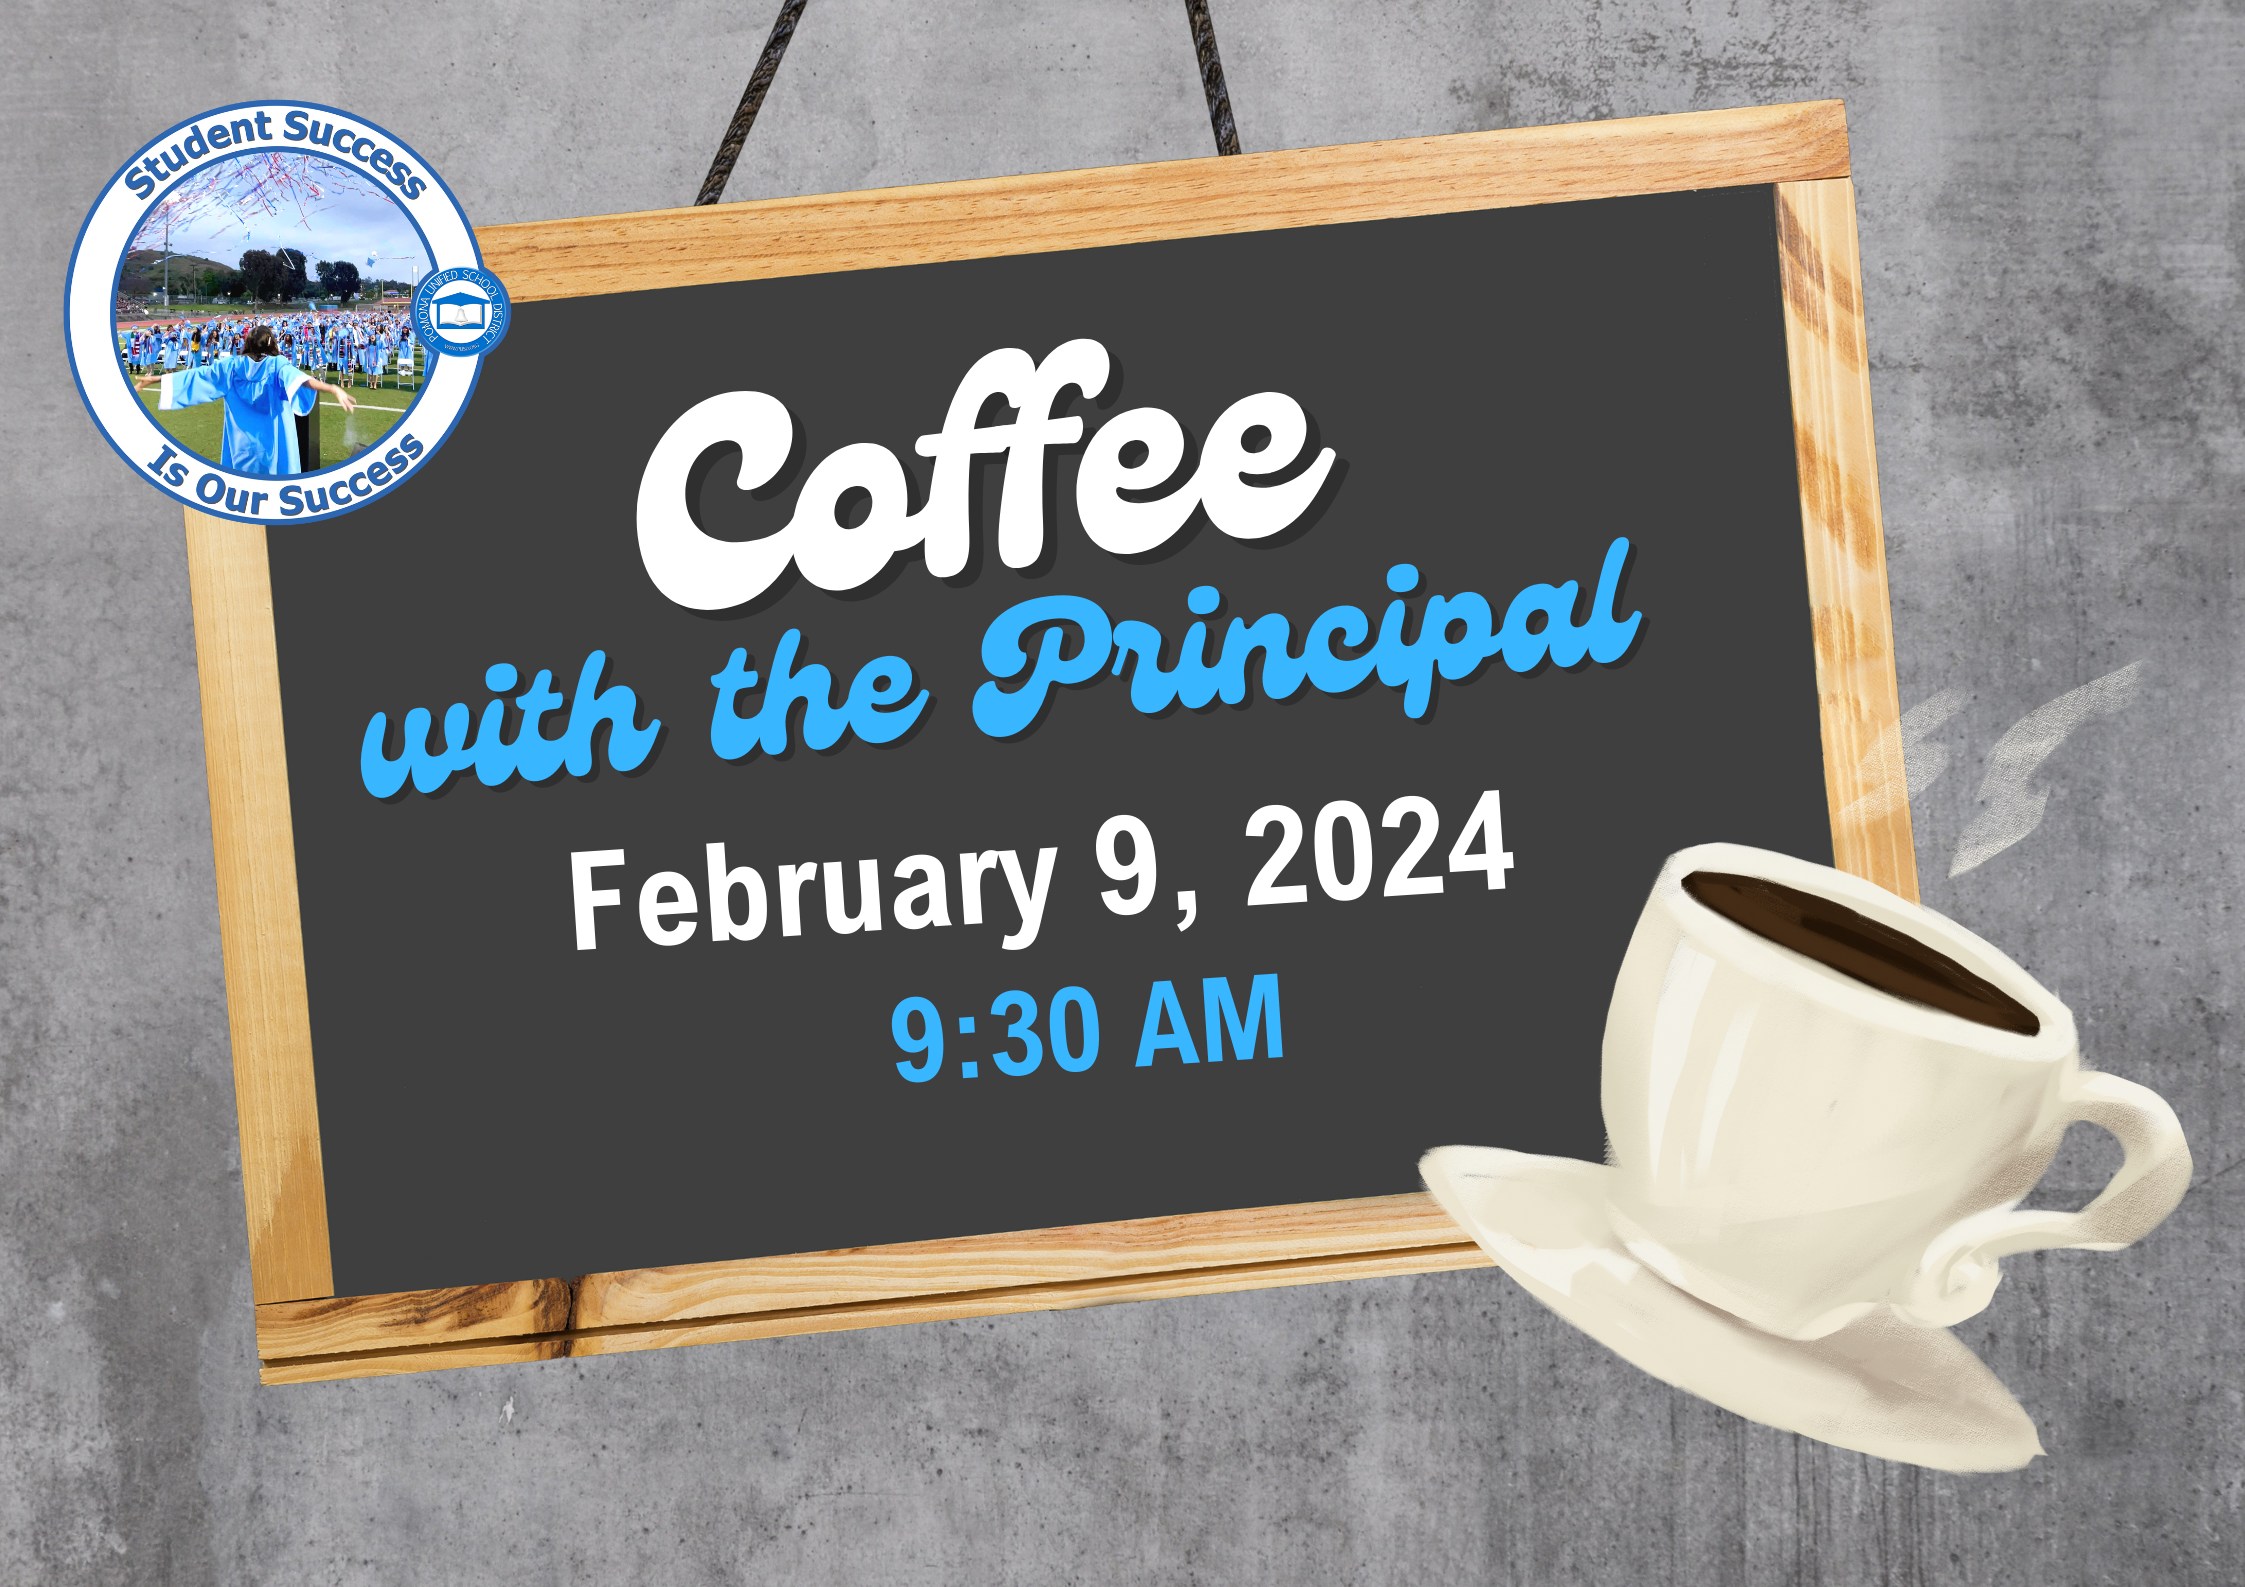 Philadelphia Coffee with the Principal Image for web, 2.9.24 at Philadelphia Elementary